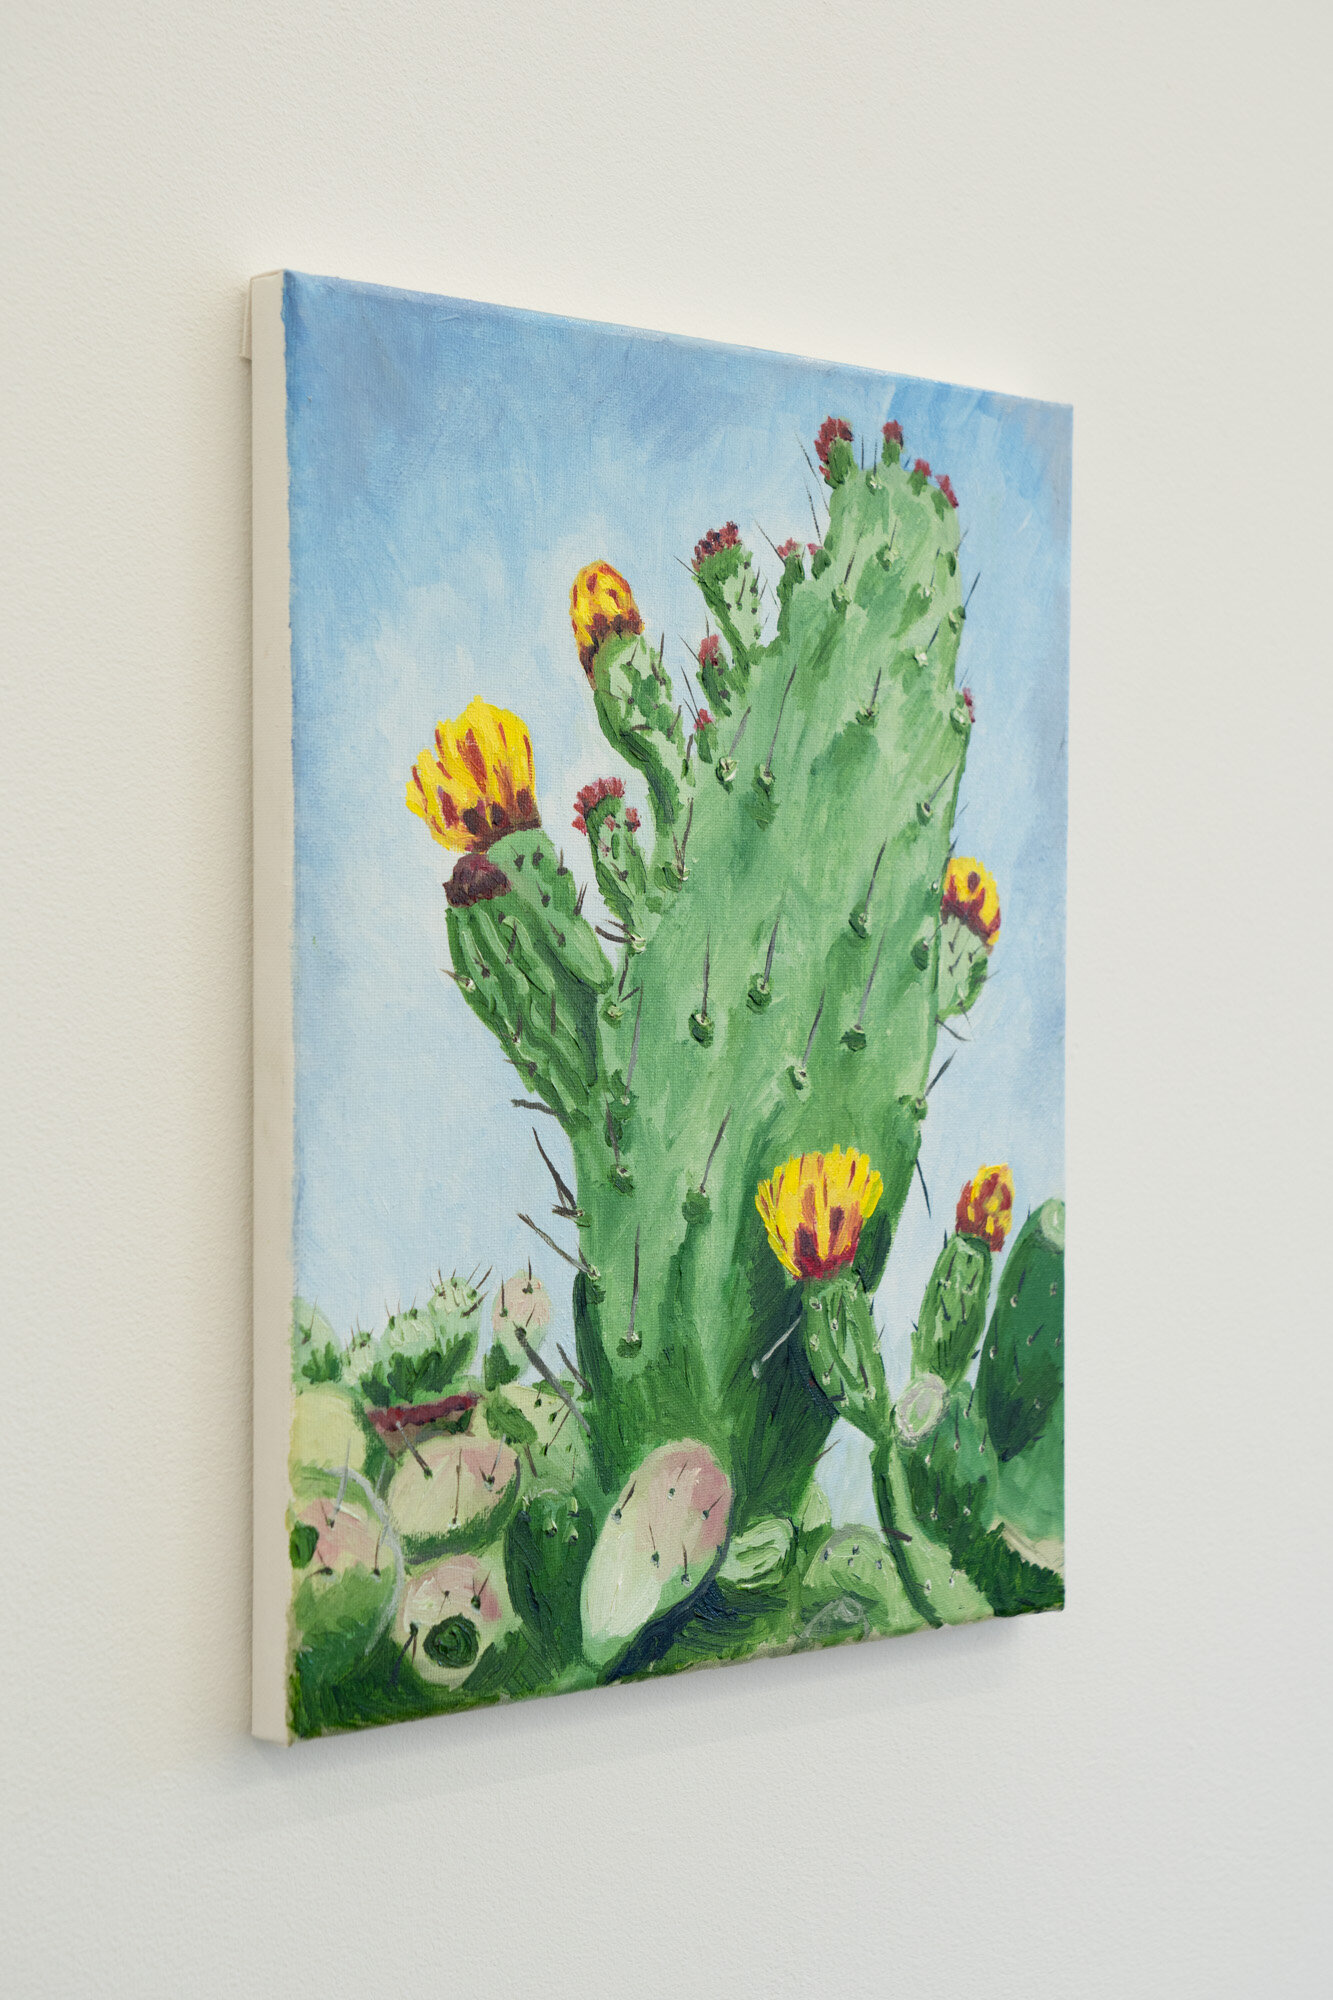  Shana Sharp  Texas Rose Cactus , 2019 Oil on canvas 14 x 11 inches 